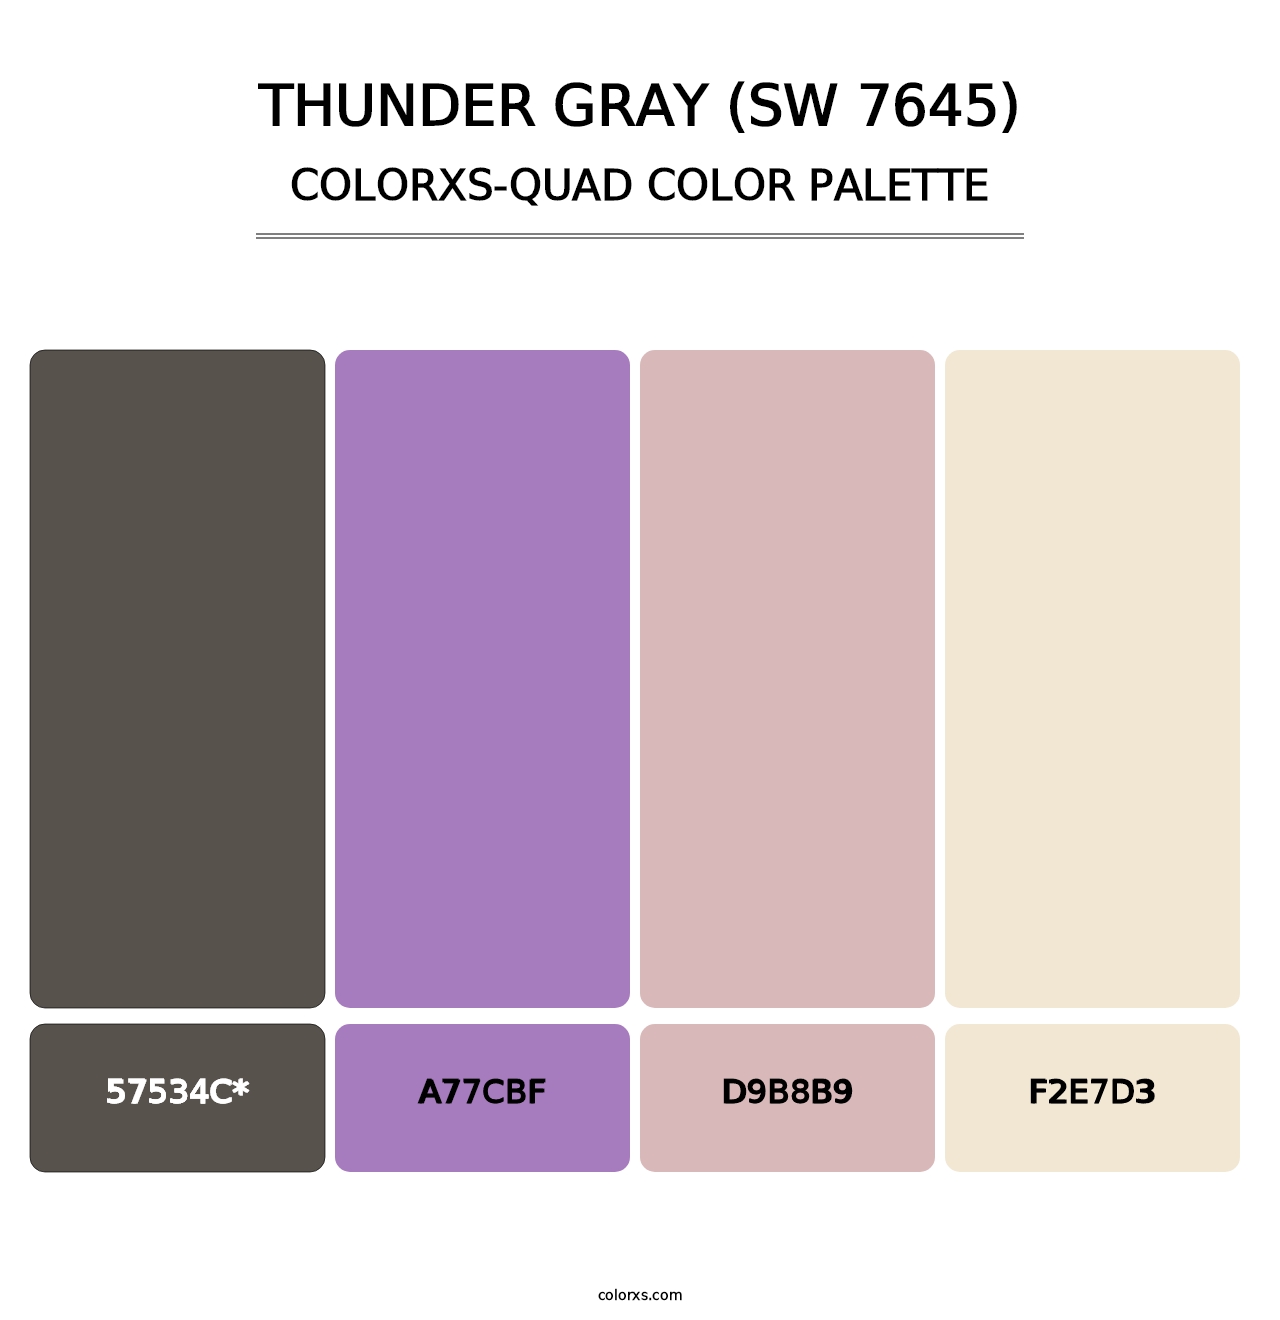 Thunder Gray (SW 7645) - Colorxs Quad Palette